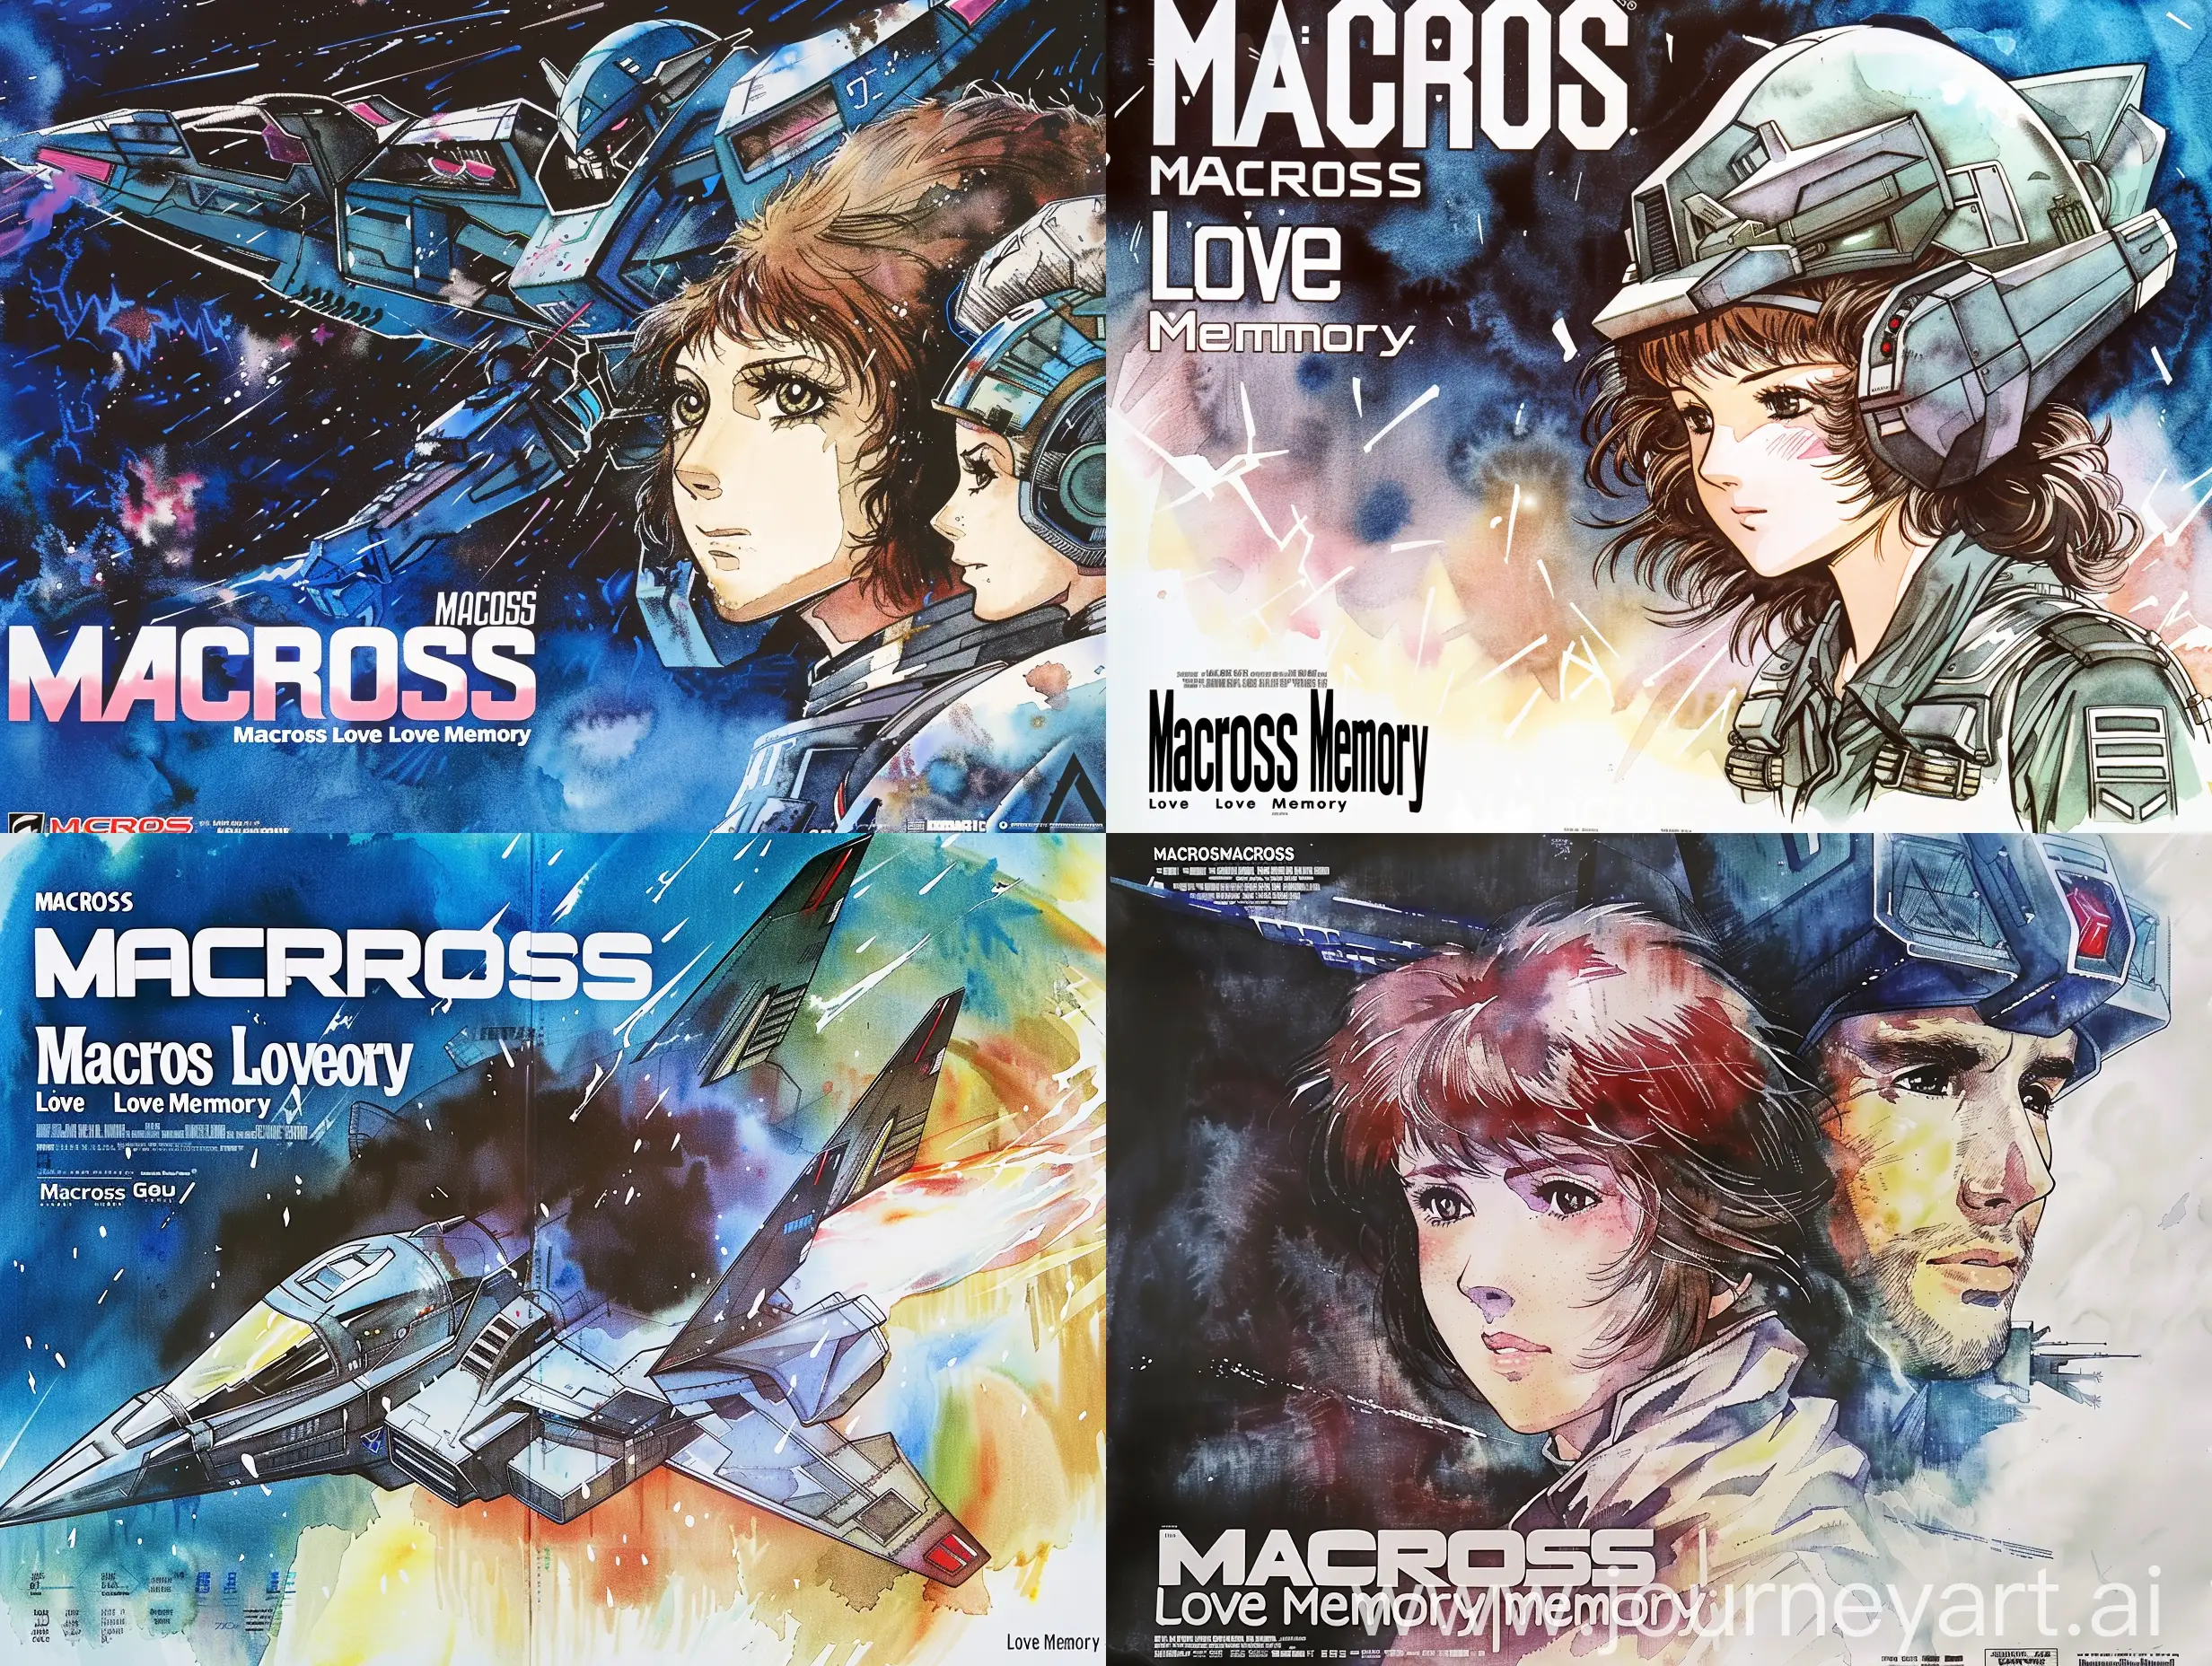  Graphic novel, アニメ映画ポスター、水彩、「マクロス マクロス 愛・おぼえですか」、1984年、河森正治、豊富なディテール、複雑な構図